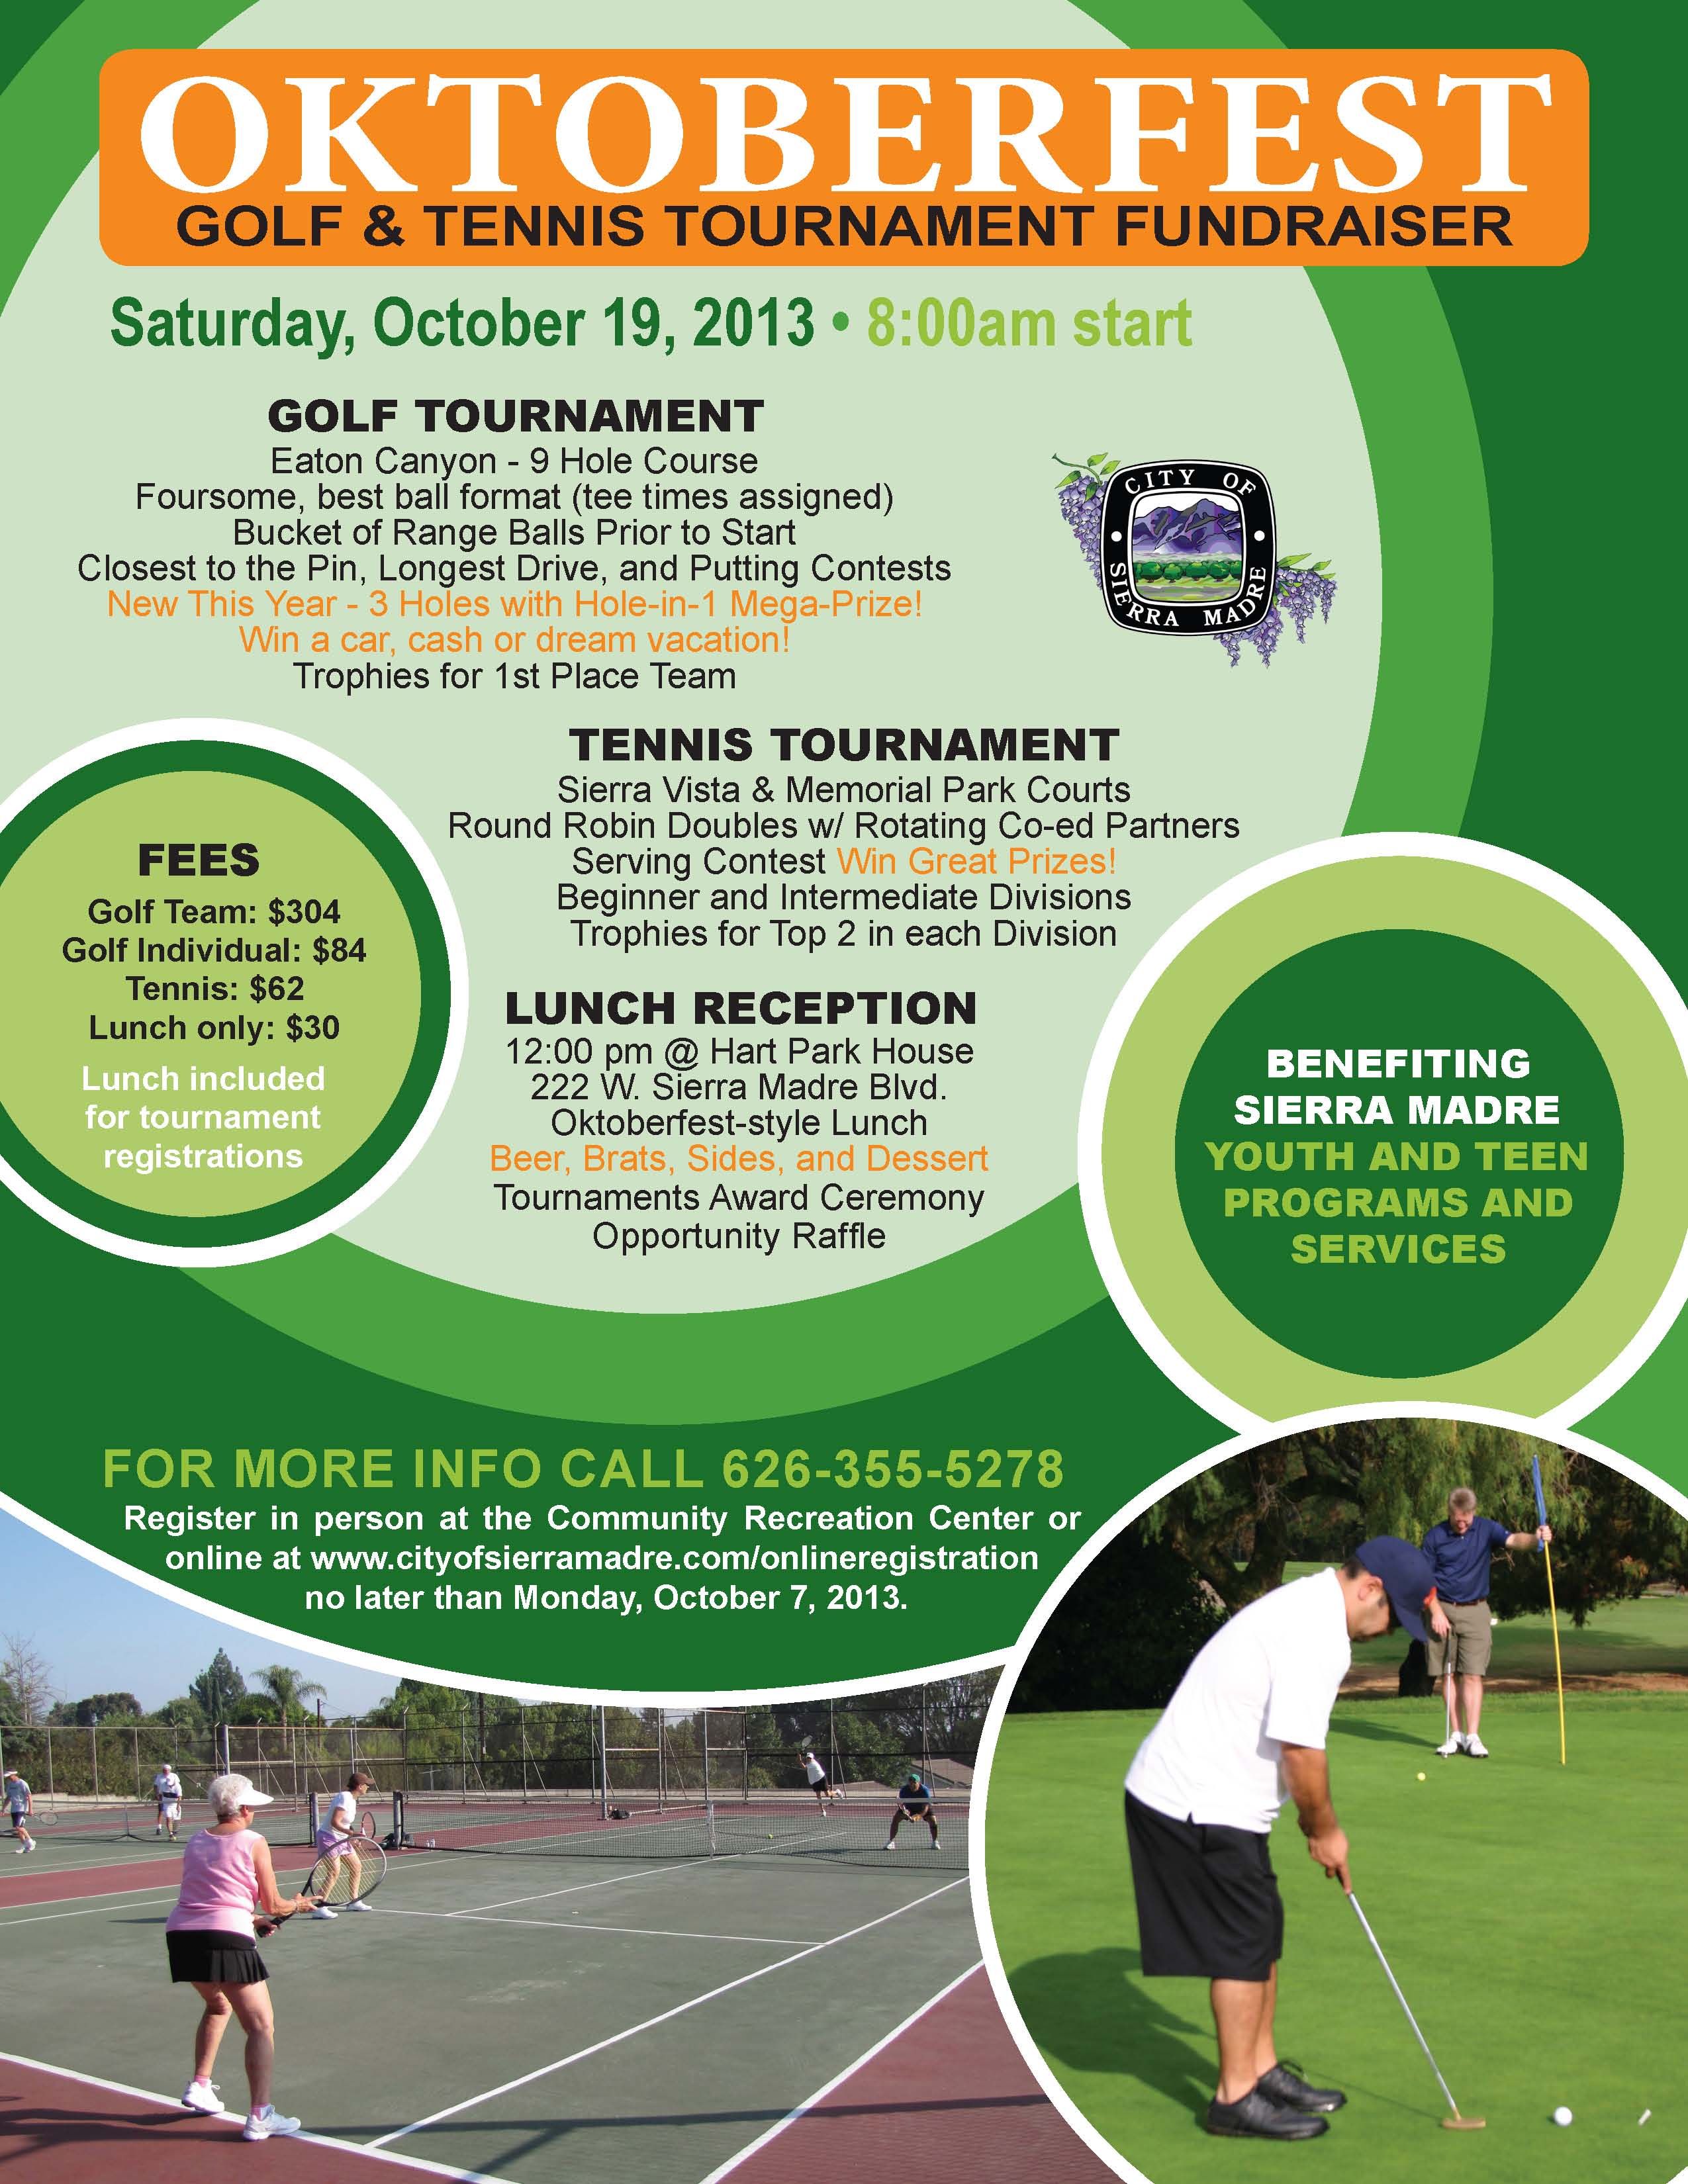 Annual Oktoberfest Golf And Tennis Tournament Fundraiser